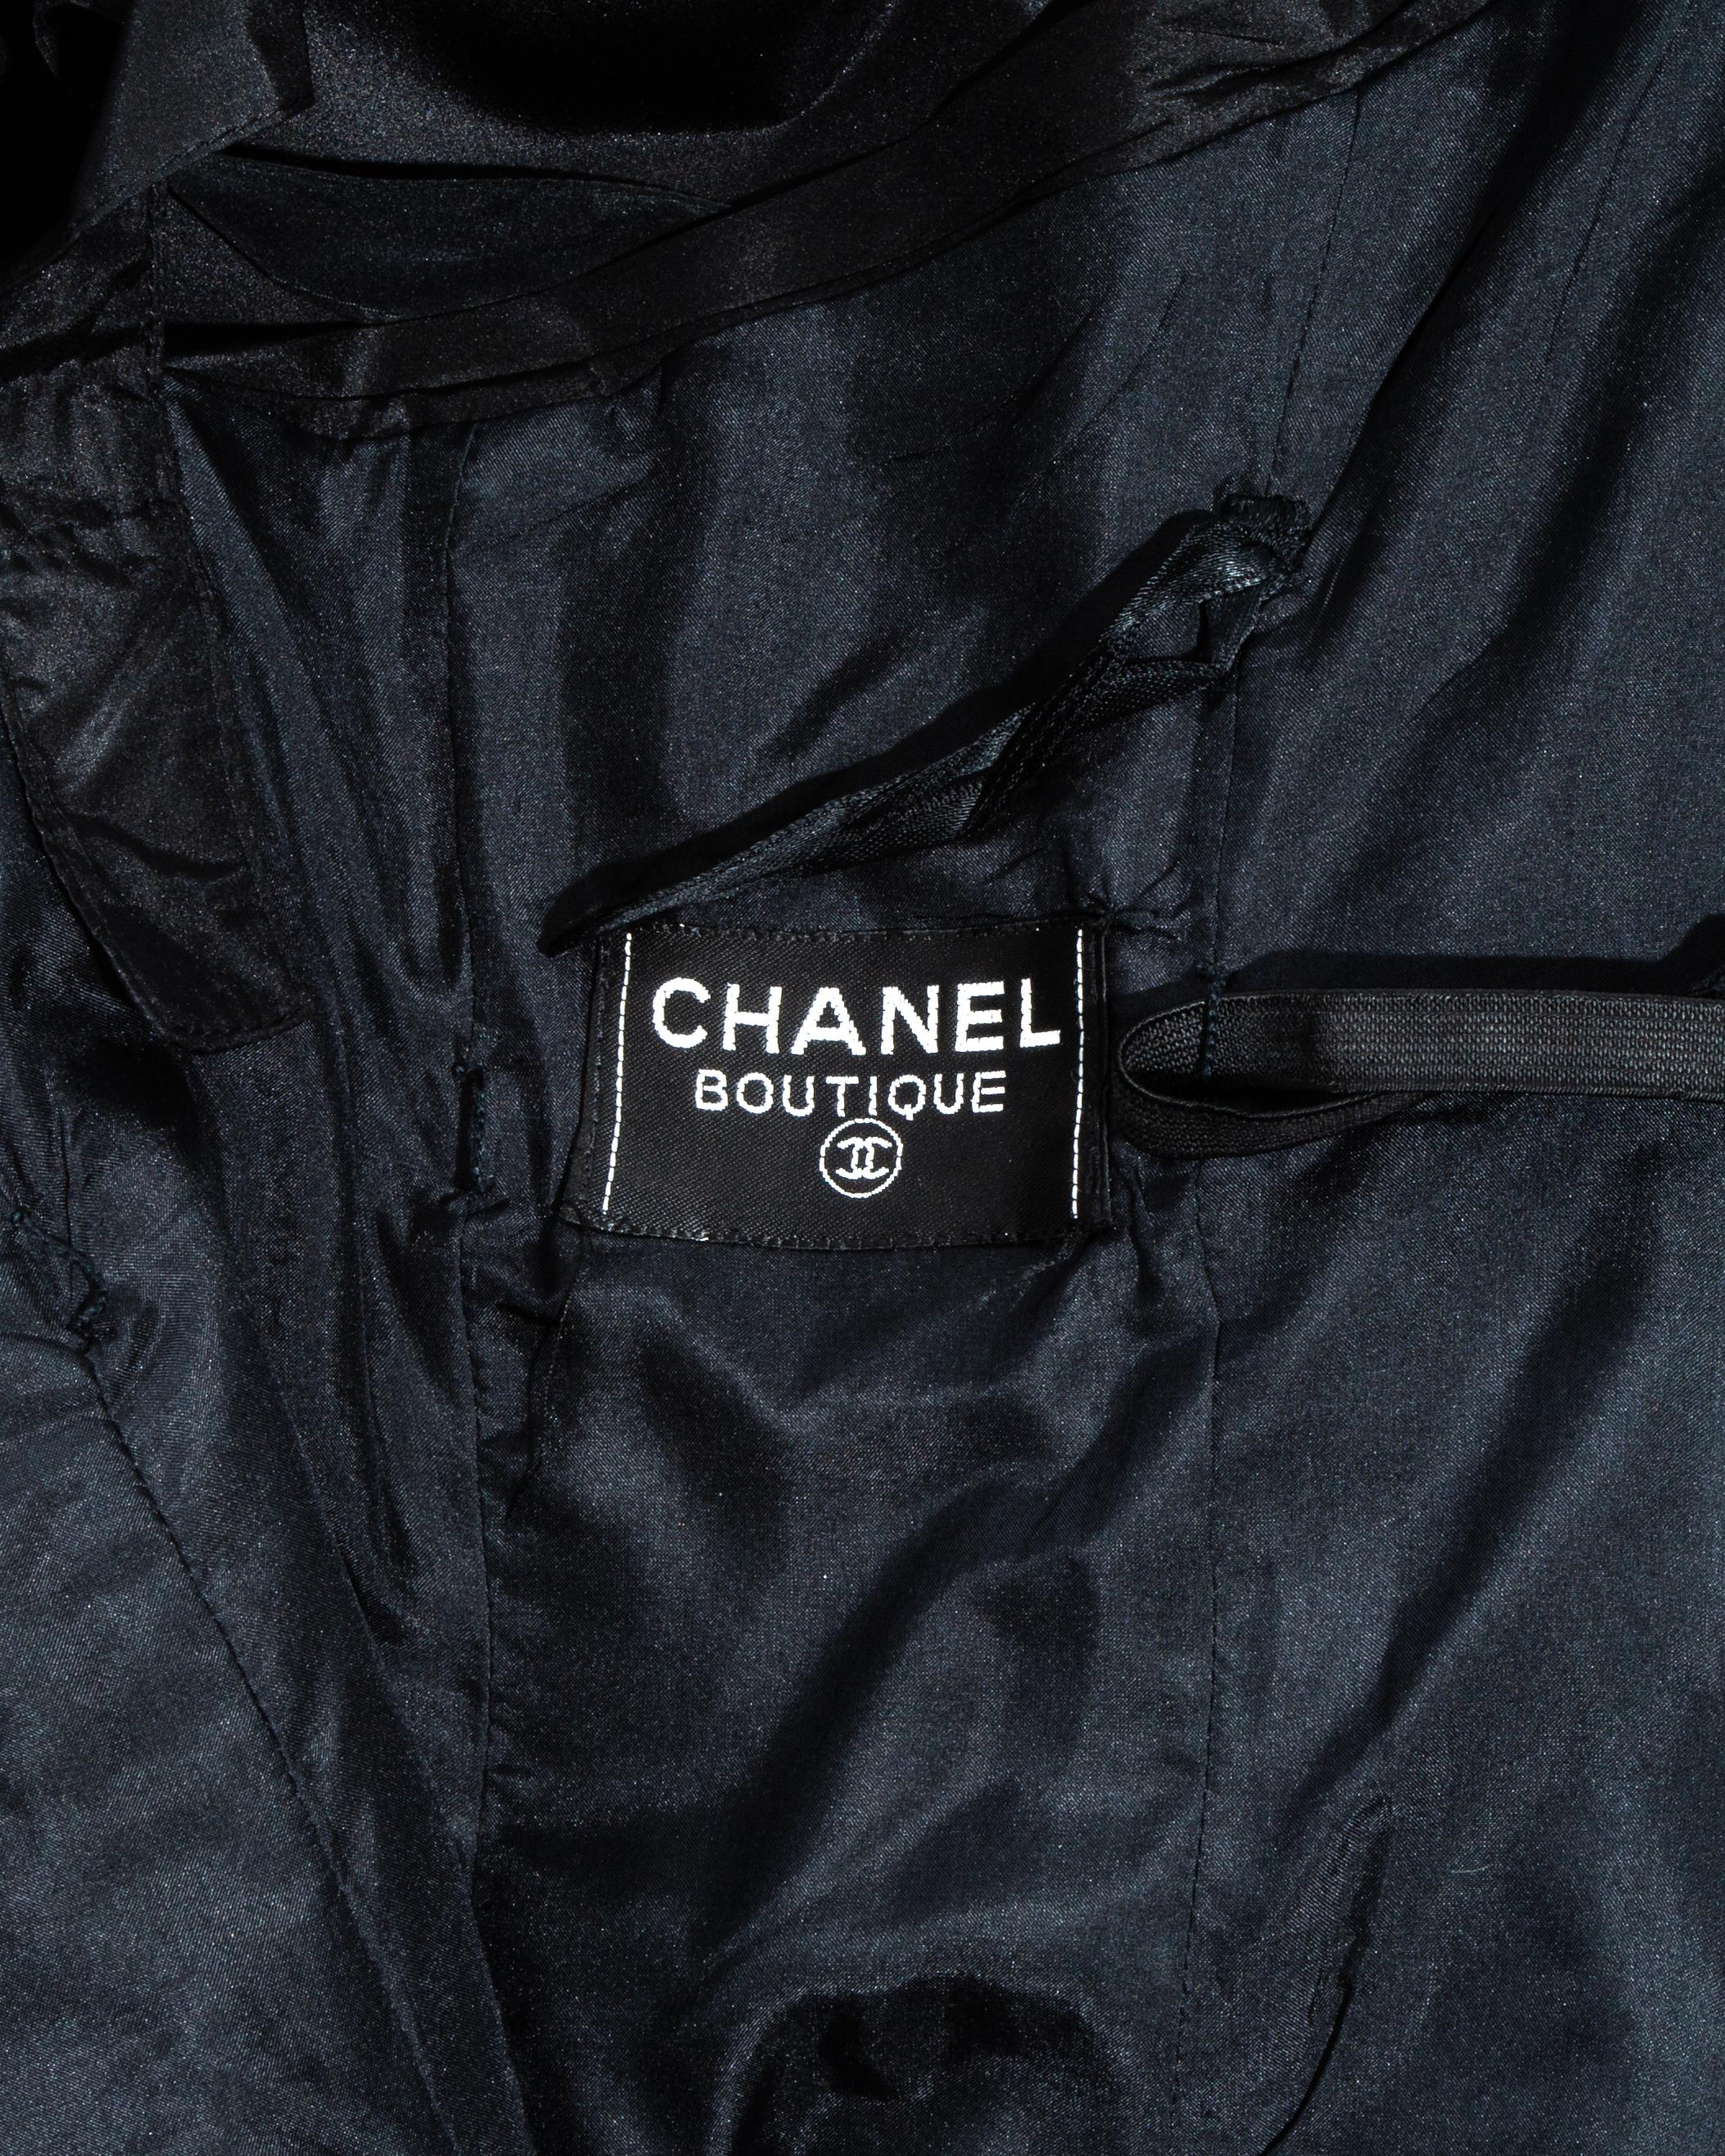 Chanel by Karl Lagerfeld black silk taffeta pleated evening dress, ss 1986 3